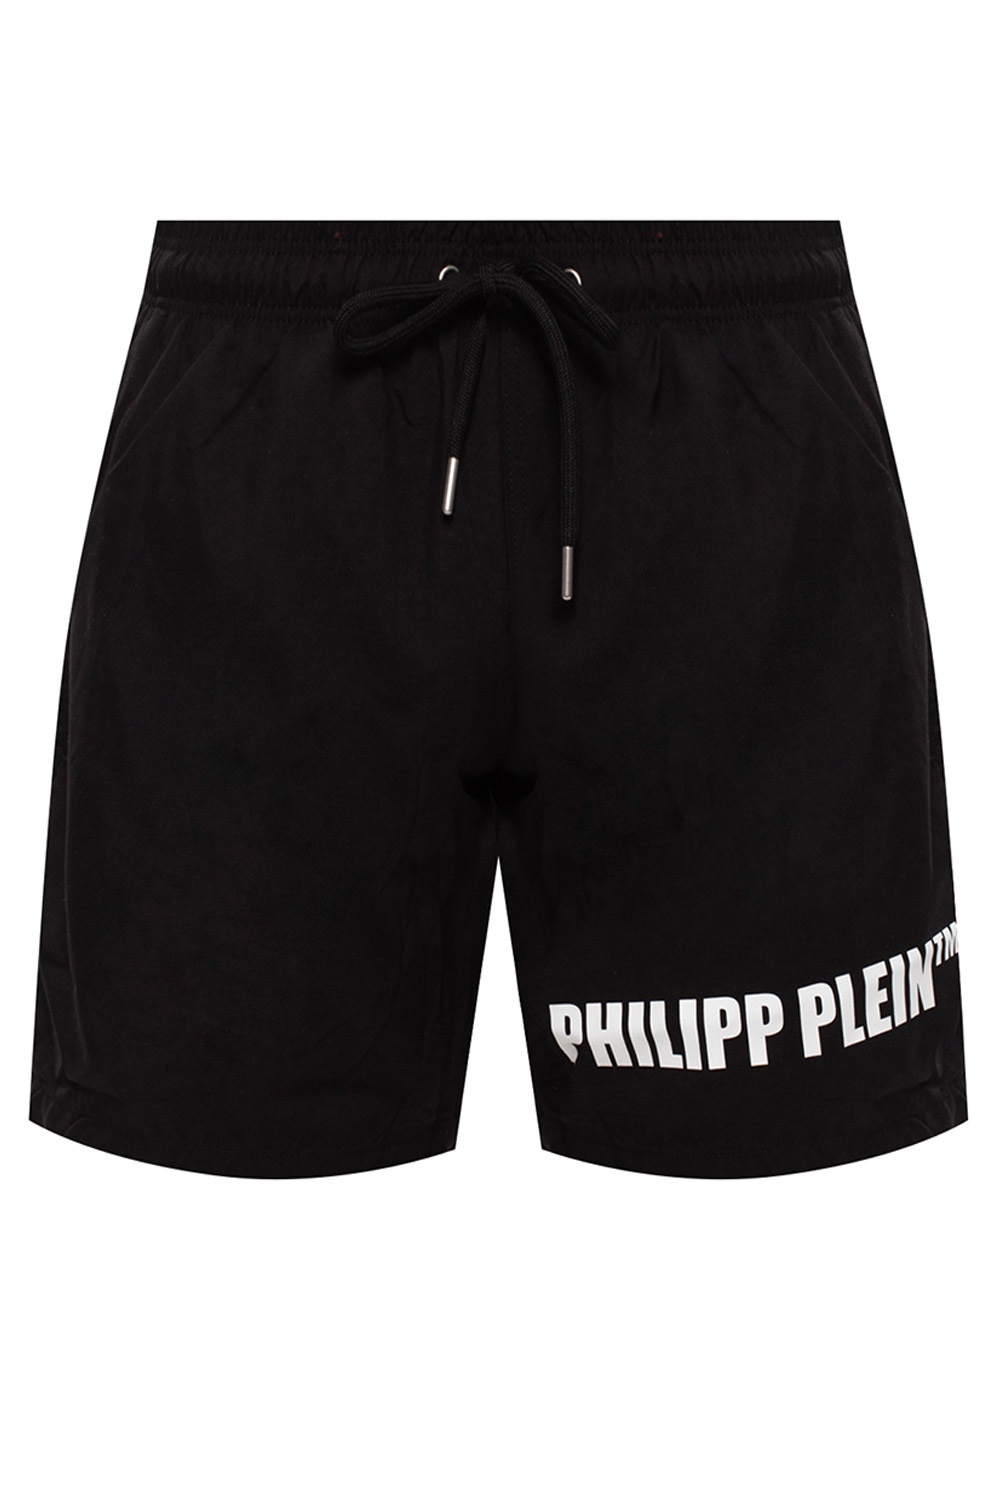 philipp plein swim shorts